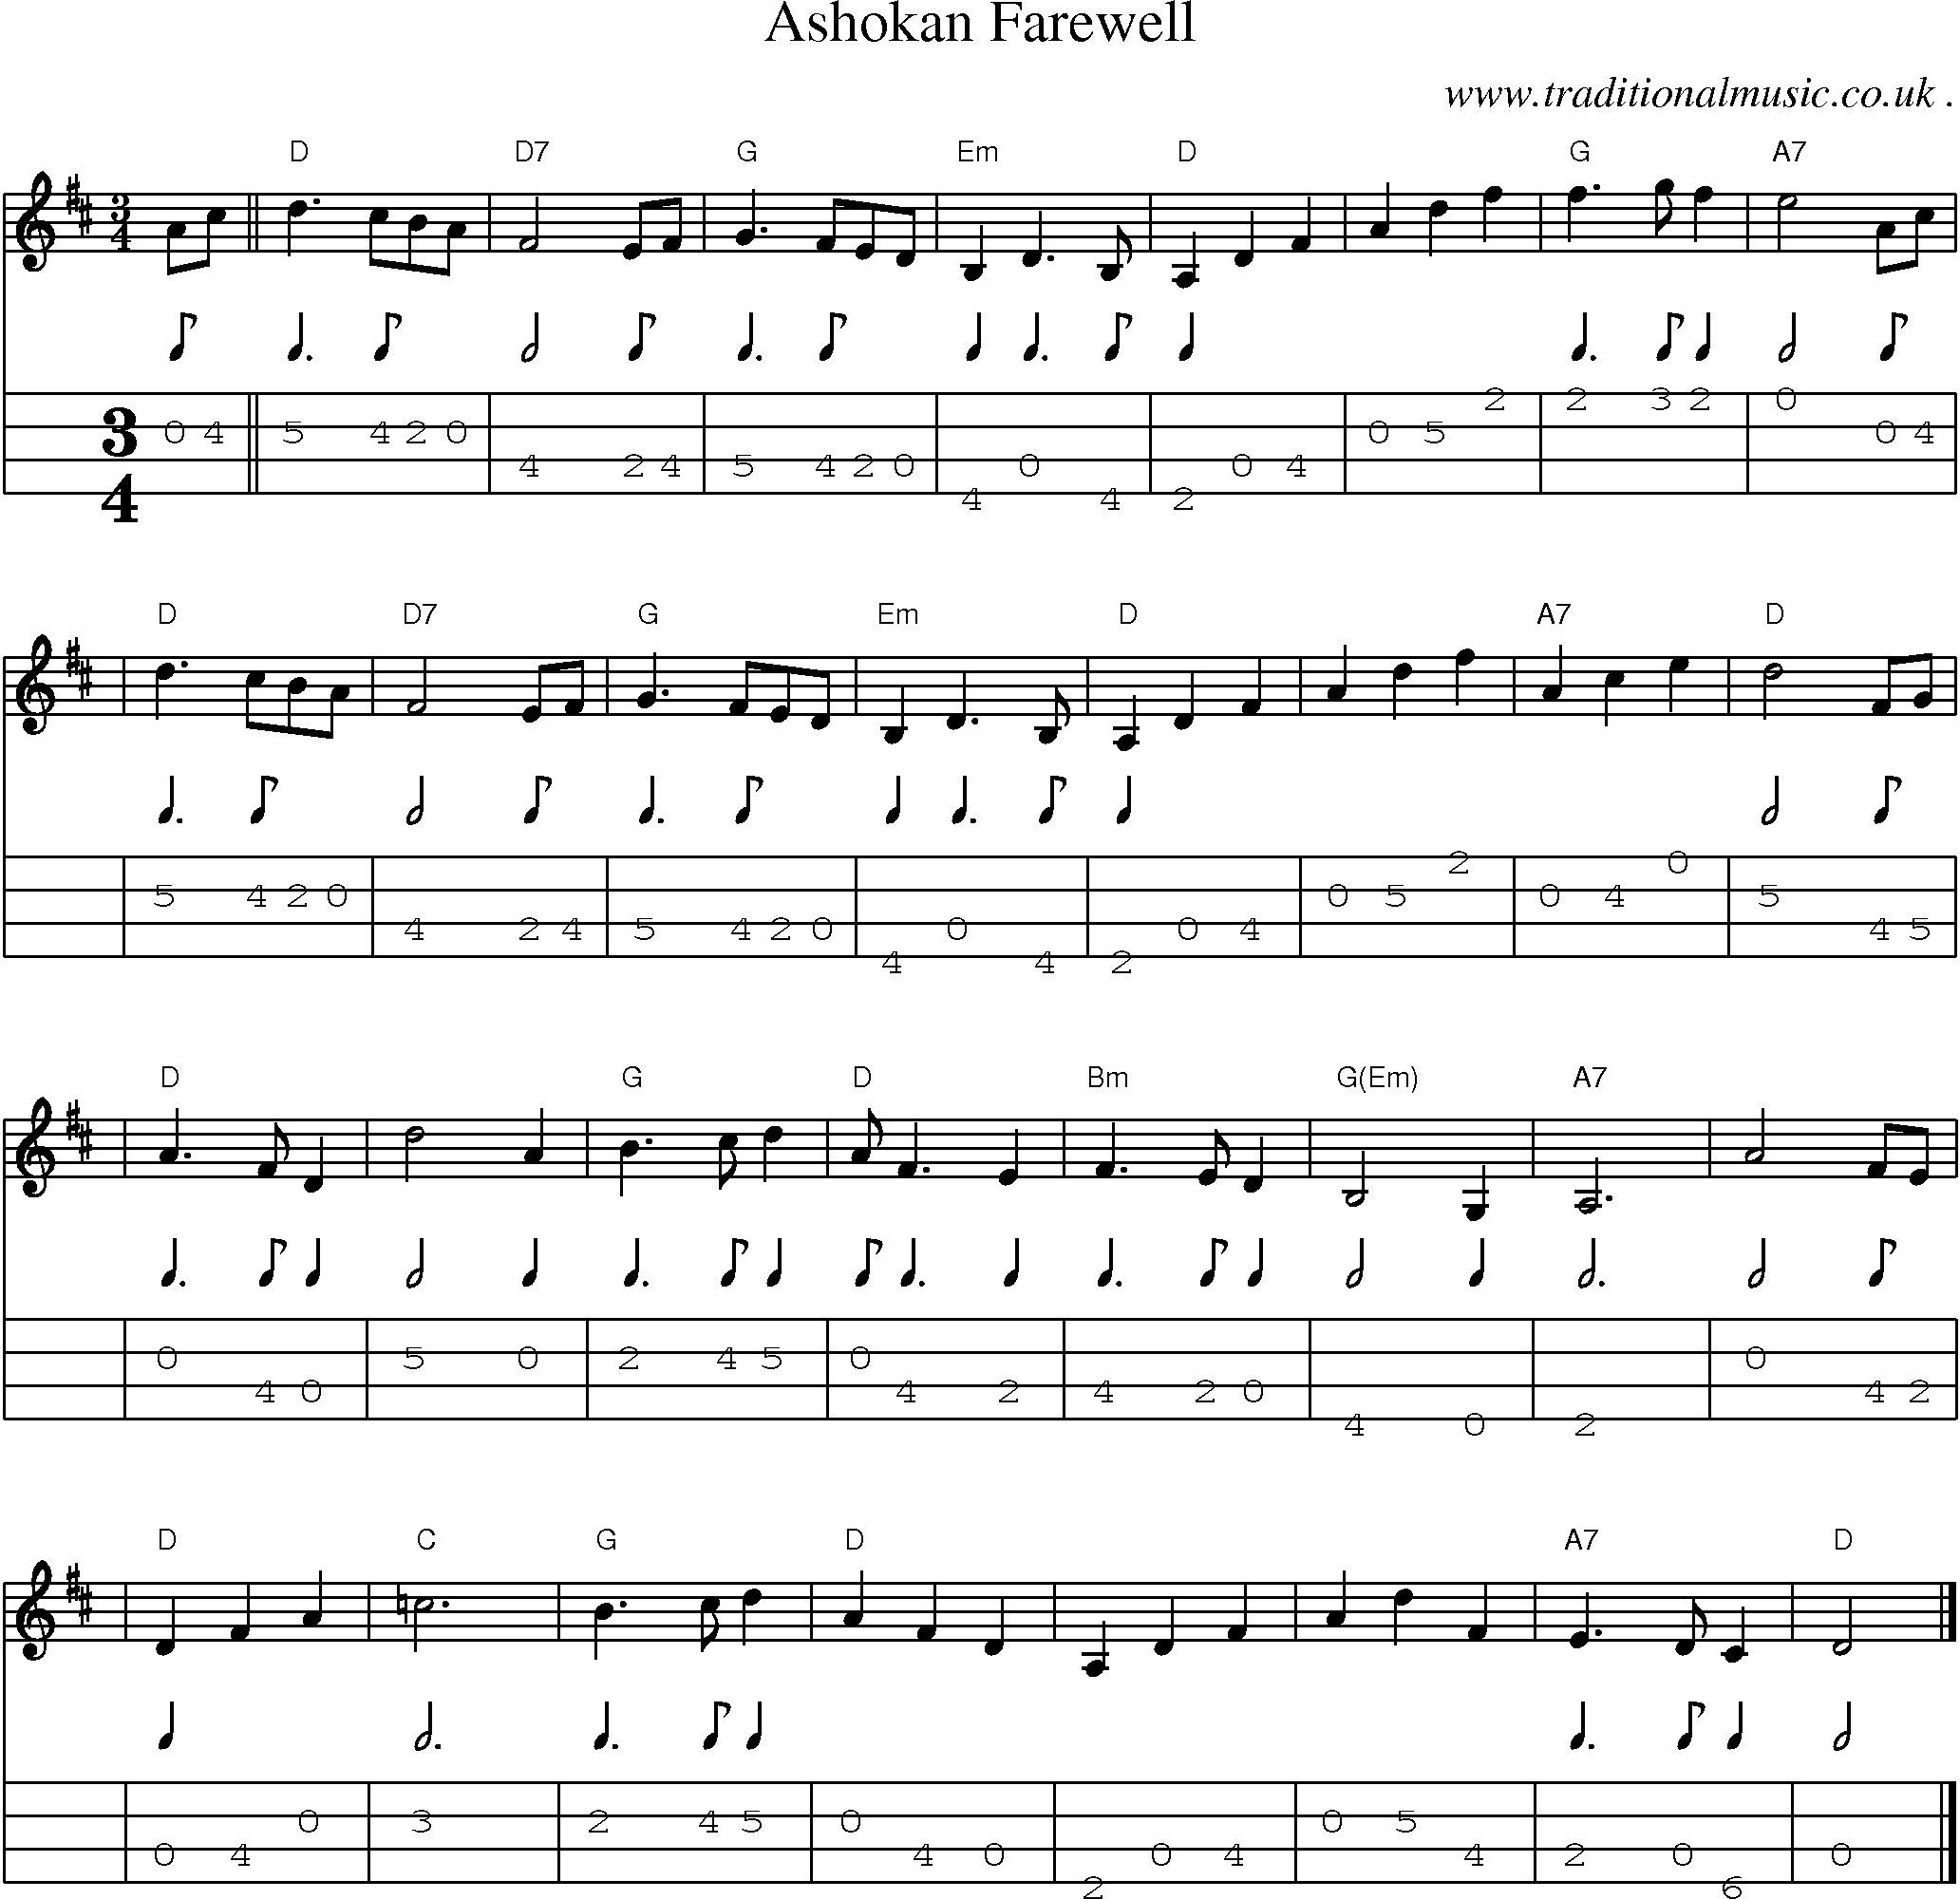 Sheet-music  score, Chords and Mandolin Tabs for Ashokan Farewell